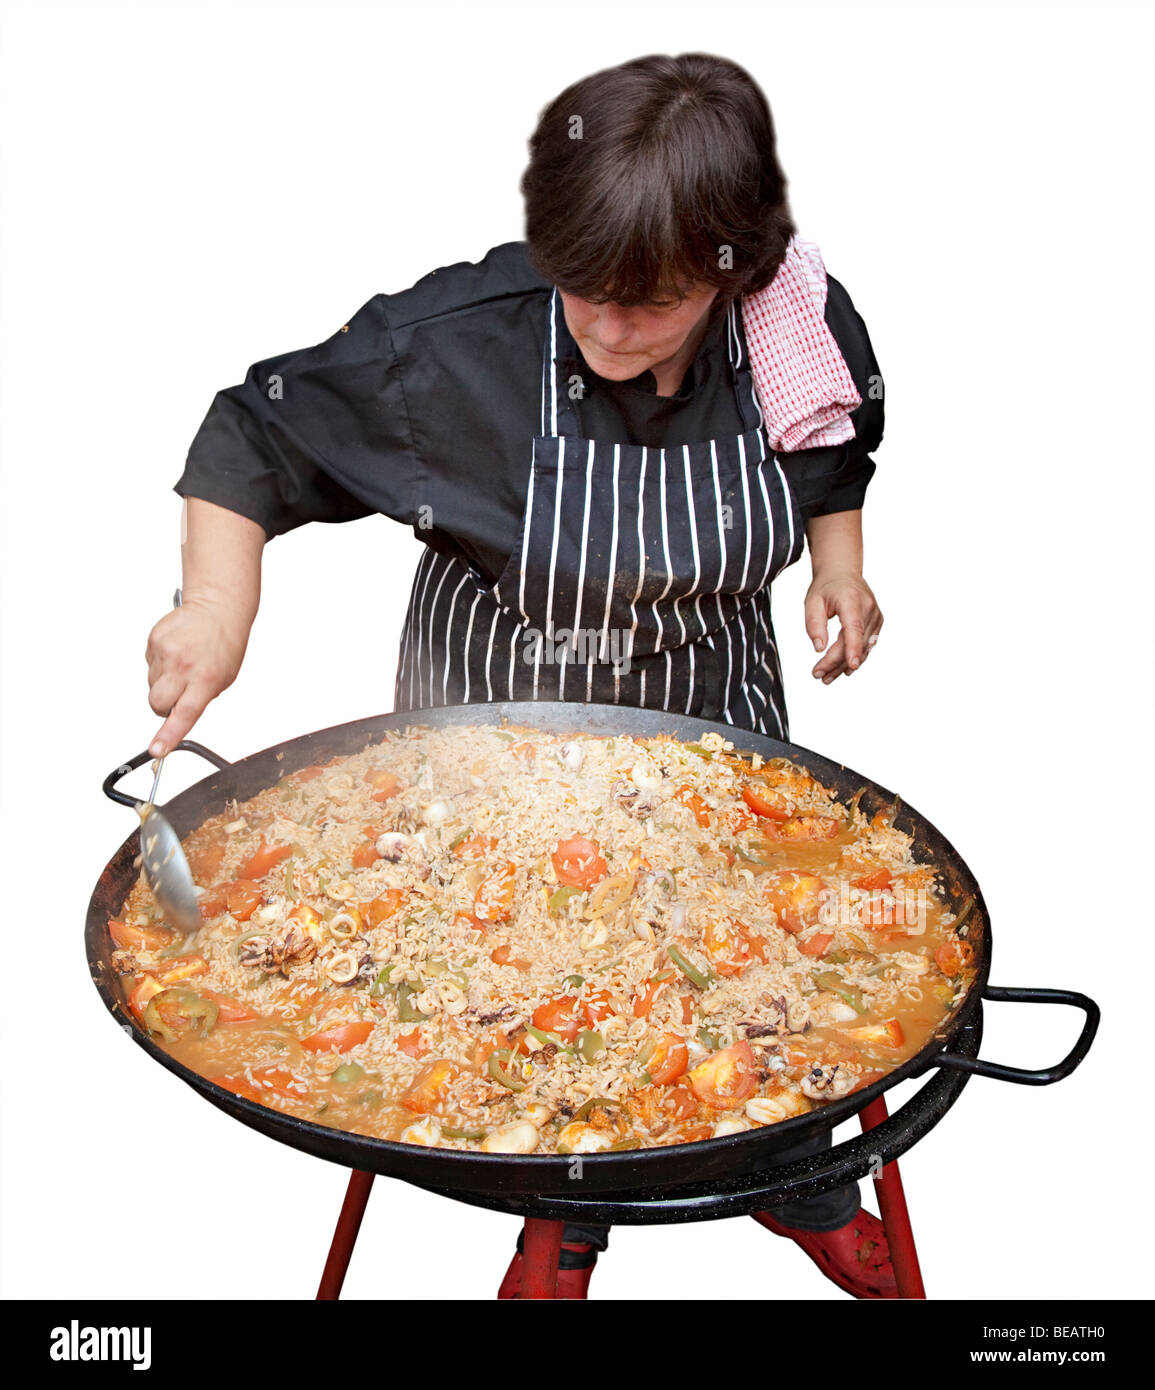 https://c8.alamy.com/comp/BEATH0/woman-cooking-paella-in-large-metal-pan-BEATH0.jpg